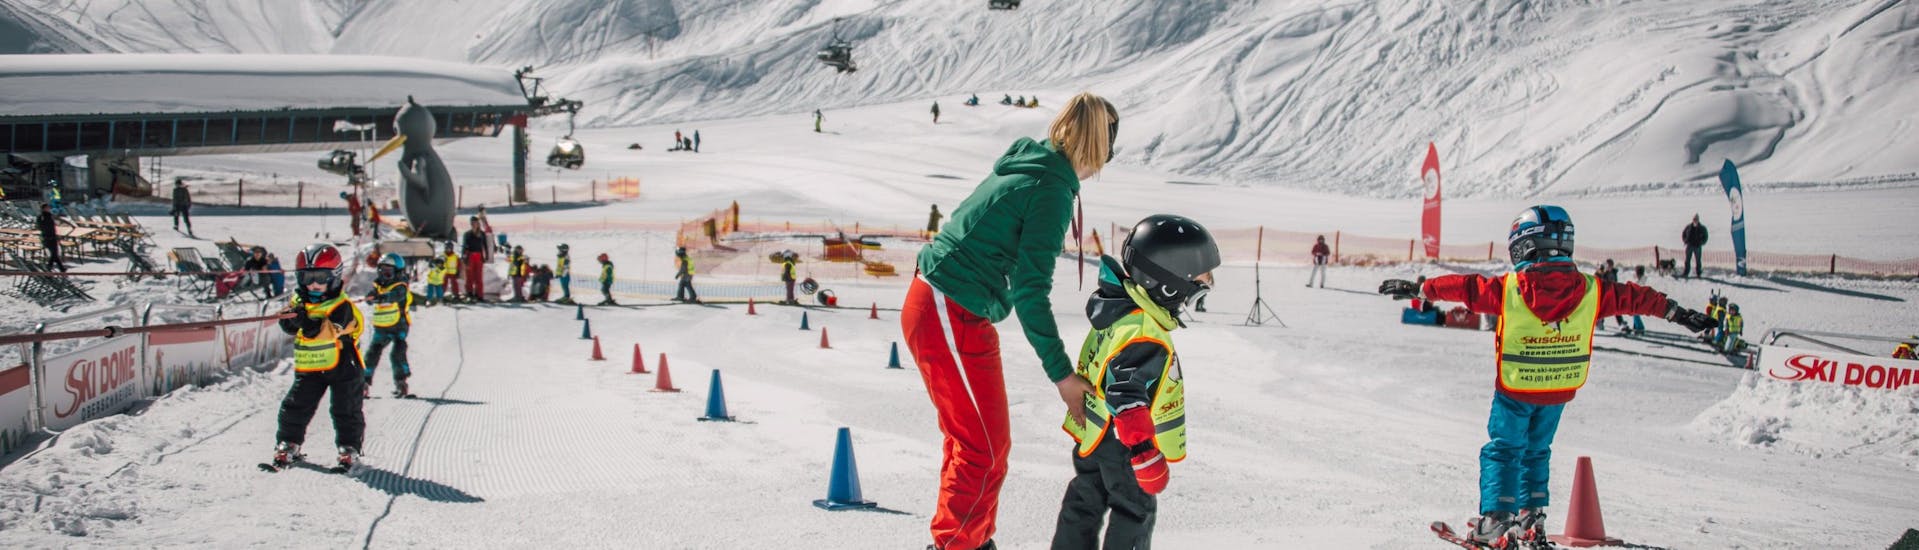 Lezioni di sci per bambini "BOBOs Bambini-Club" (4 anni) per principianti avec Skischule Ski Dome Oberschneider Kaprun.